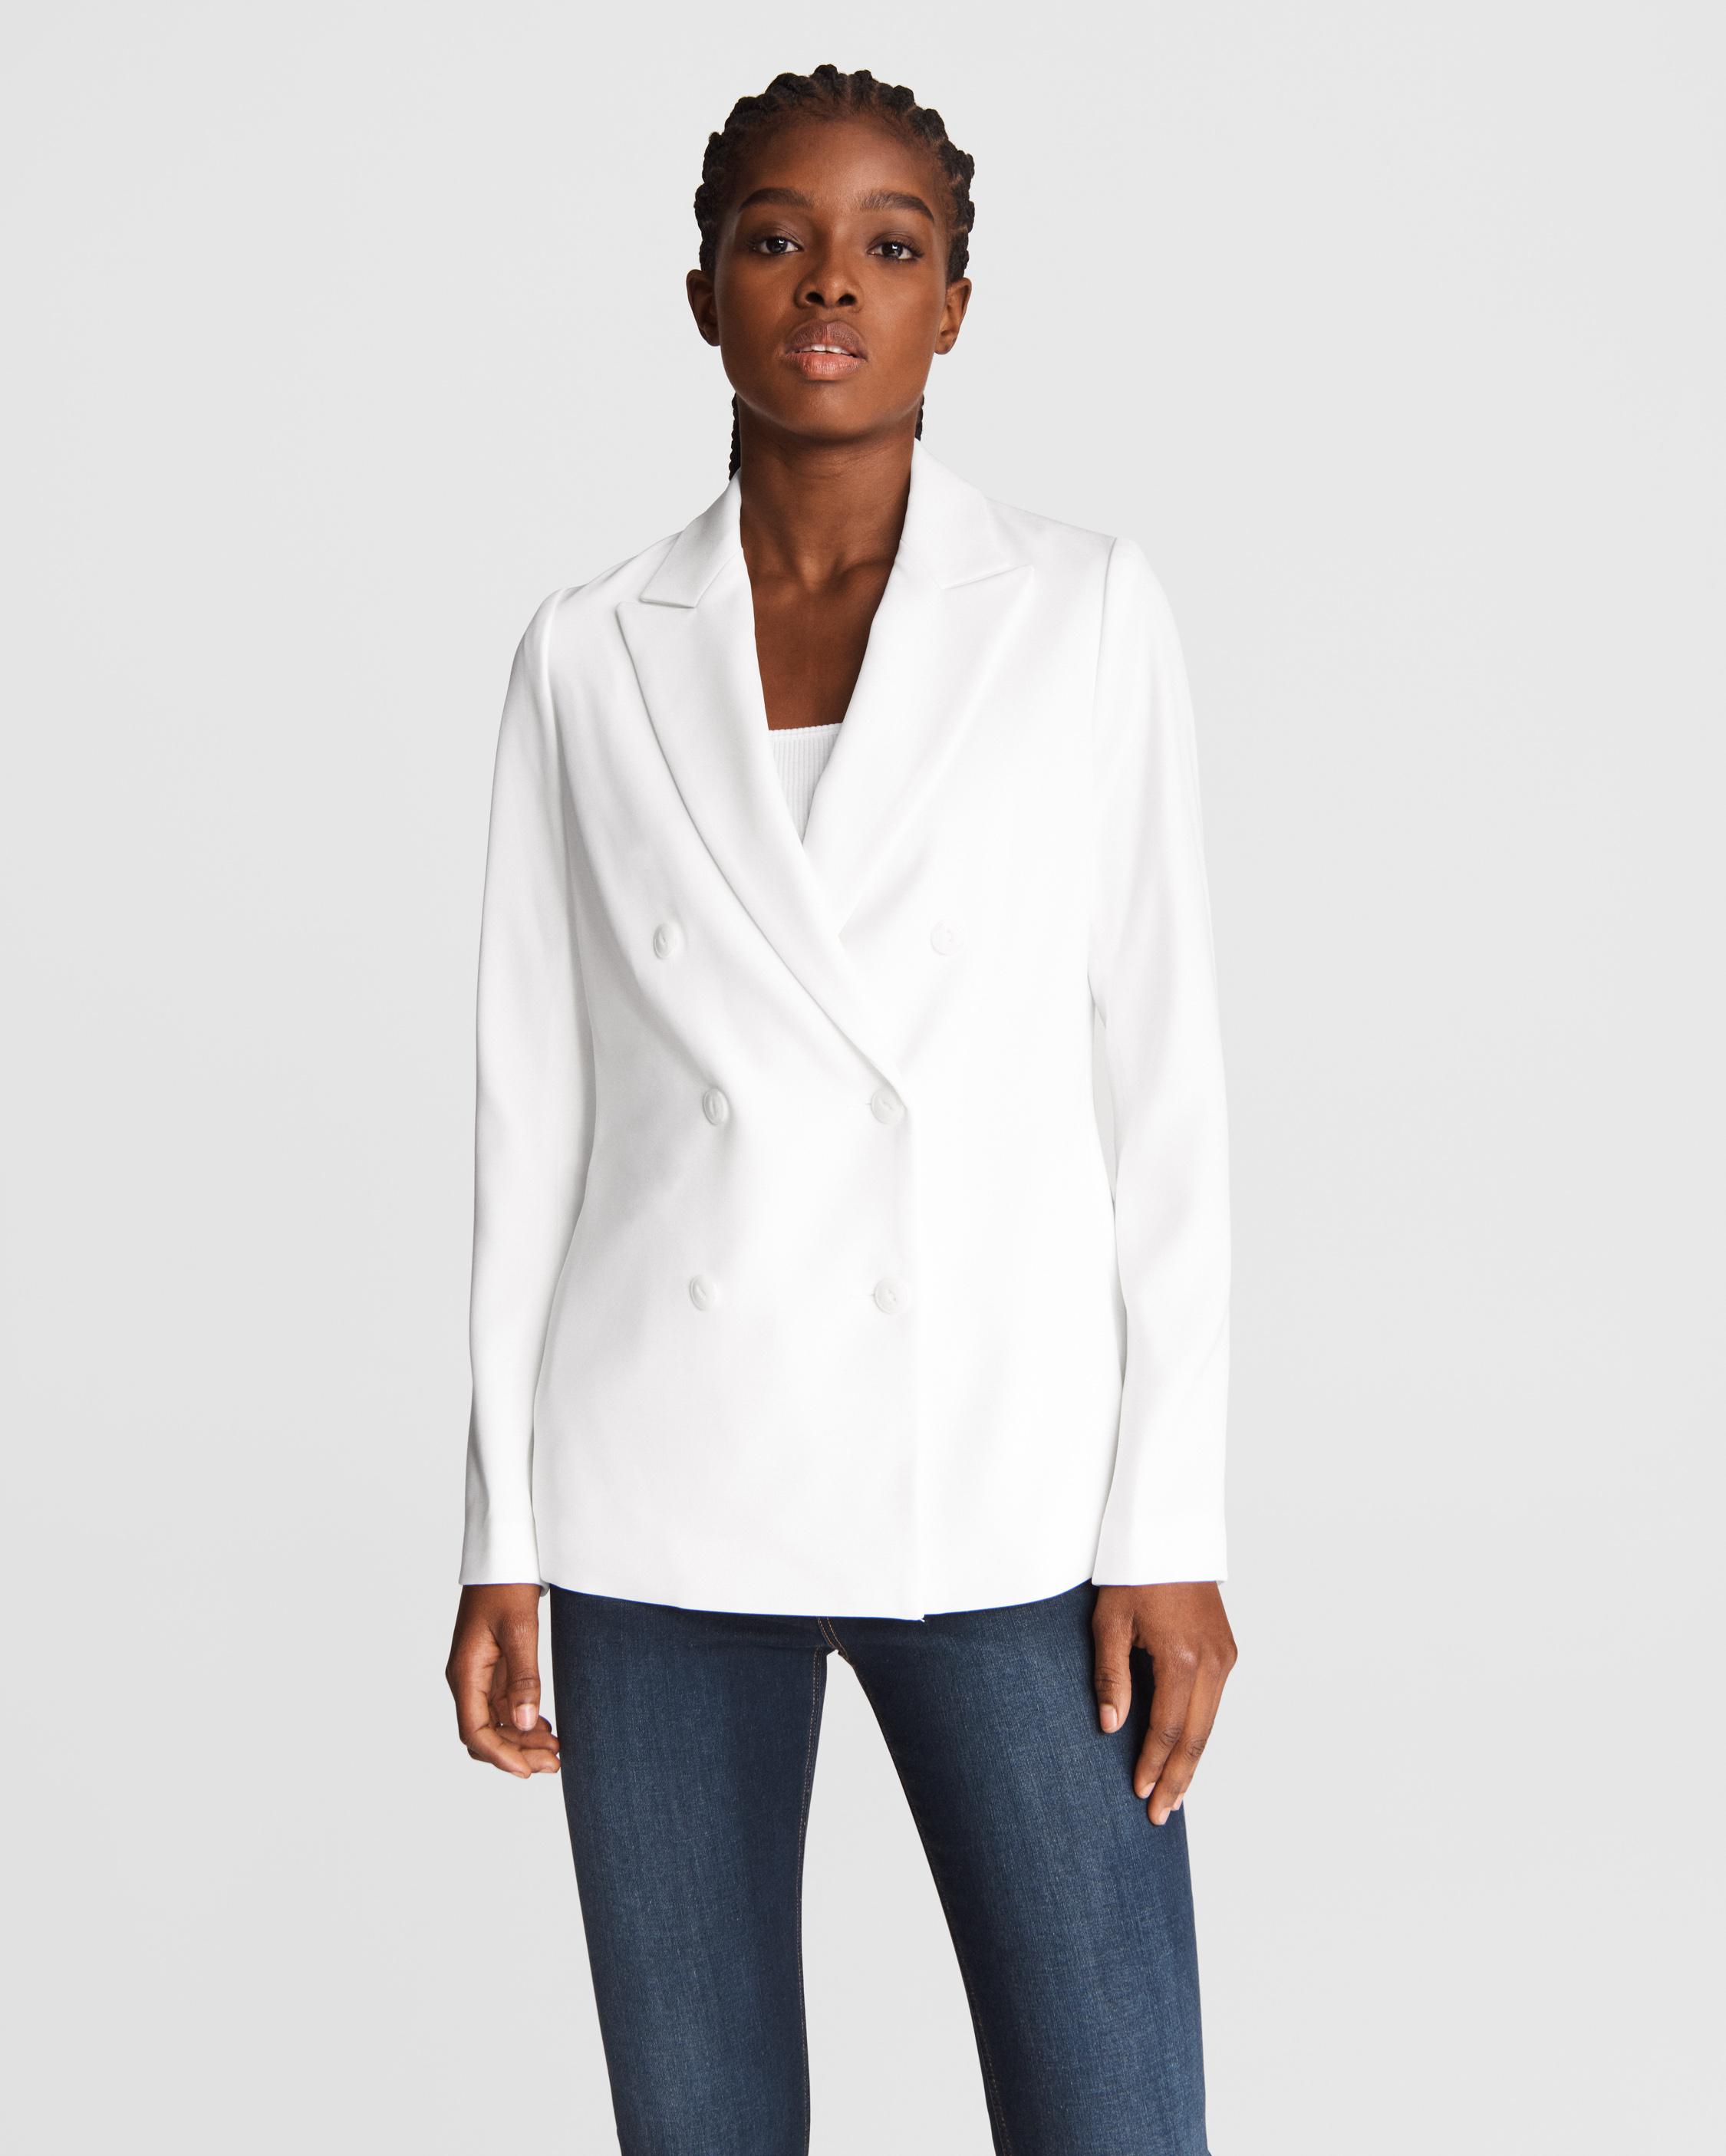 Shop Sale Jackets & Coats for Women | rag & bone